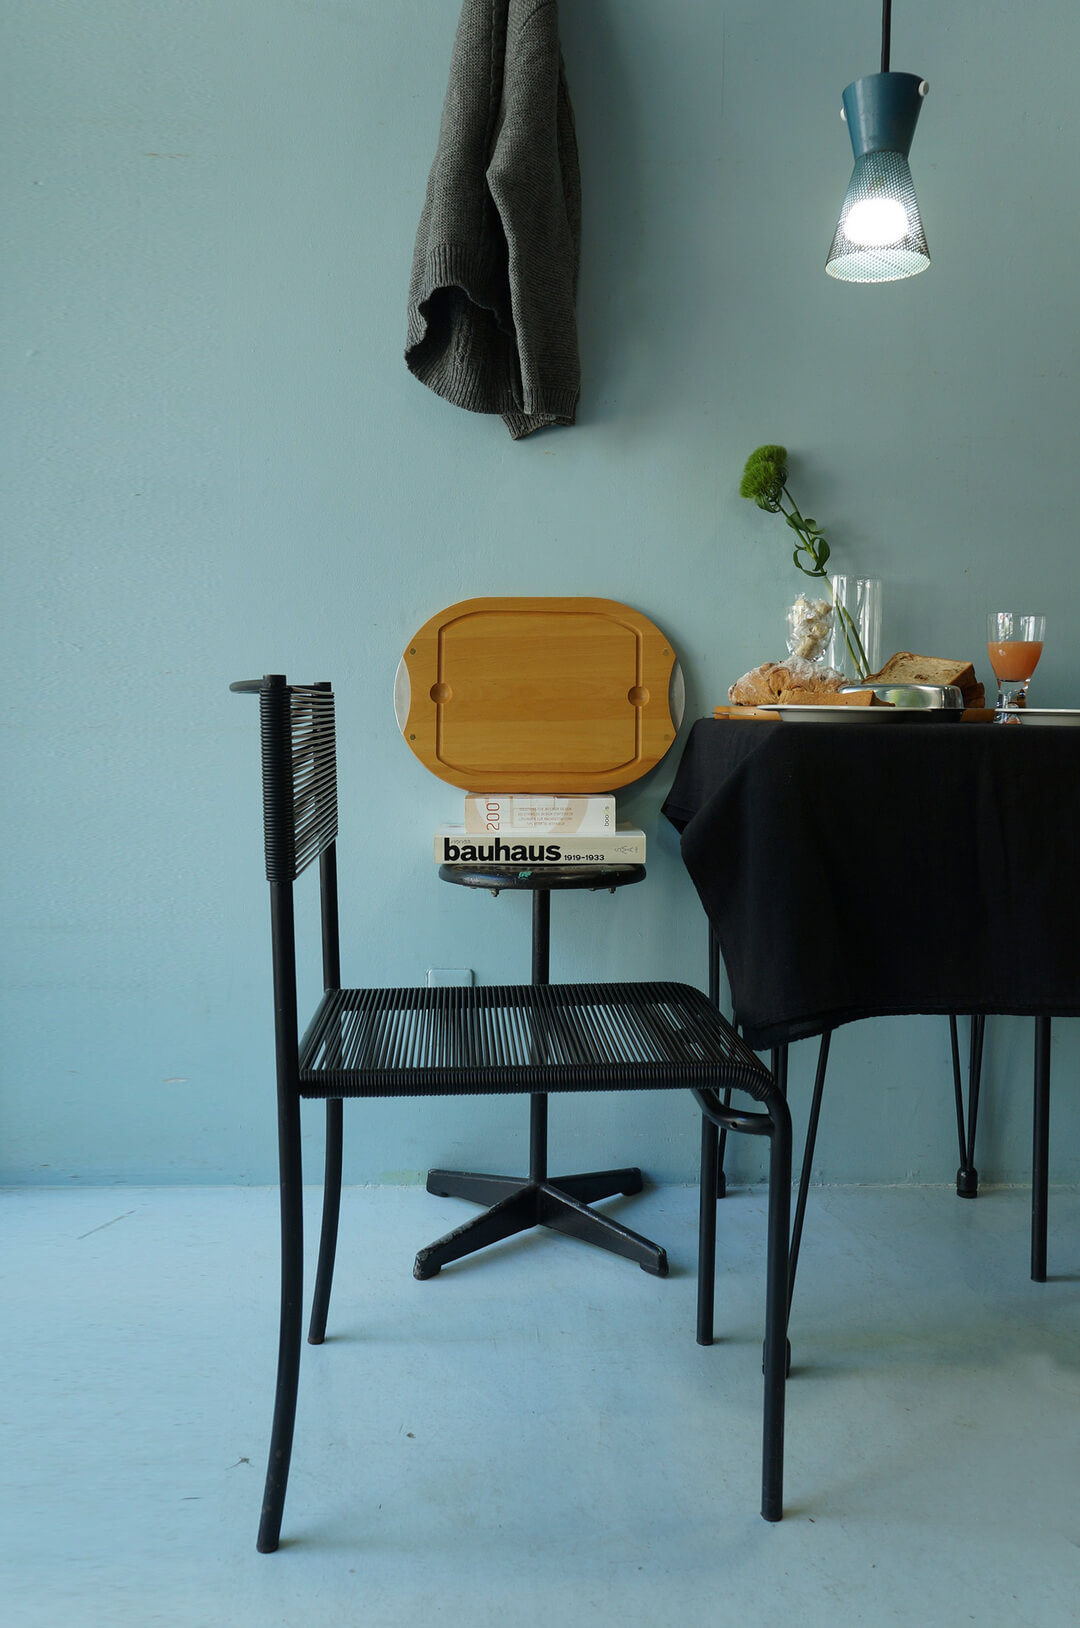 Beech Wood Cutting Board Made In Denmark/デンマーク製 カッティングボード ビーチ材 北欧雑貨 食器 インテリア